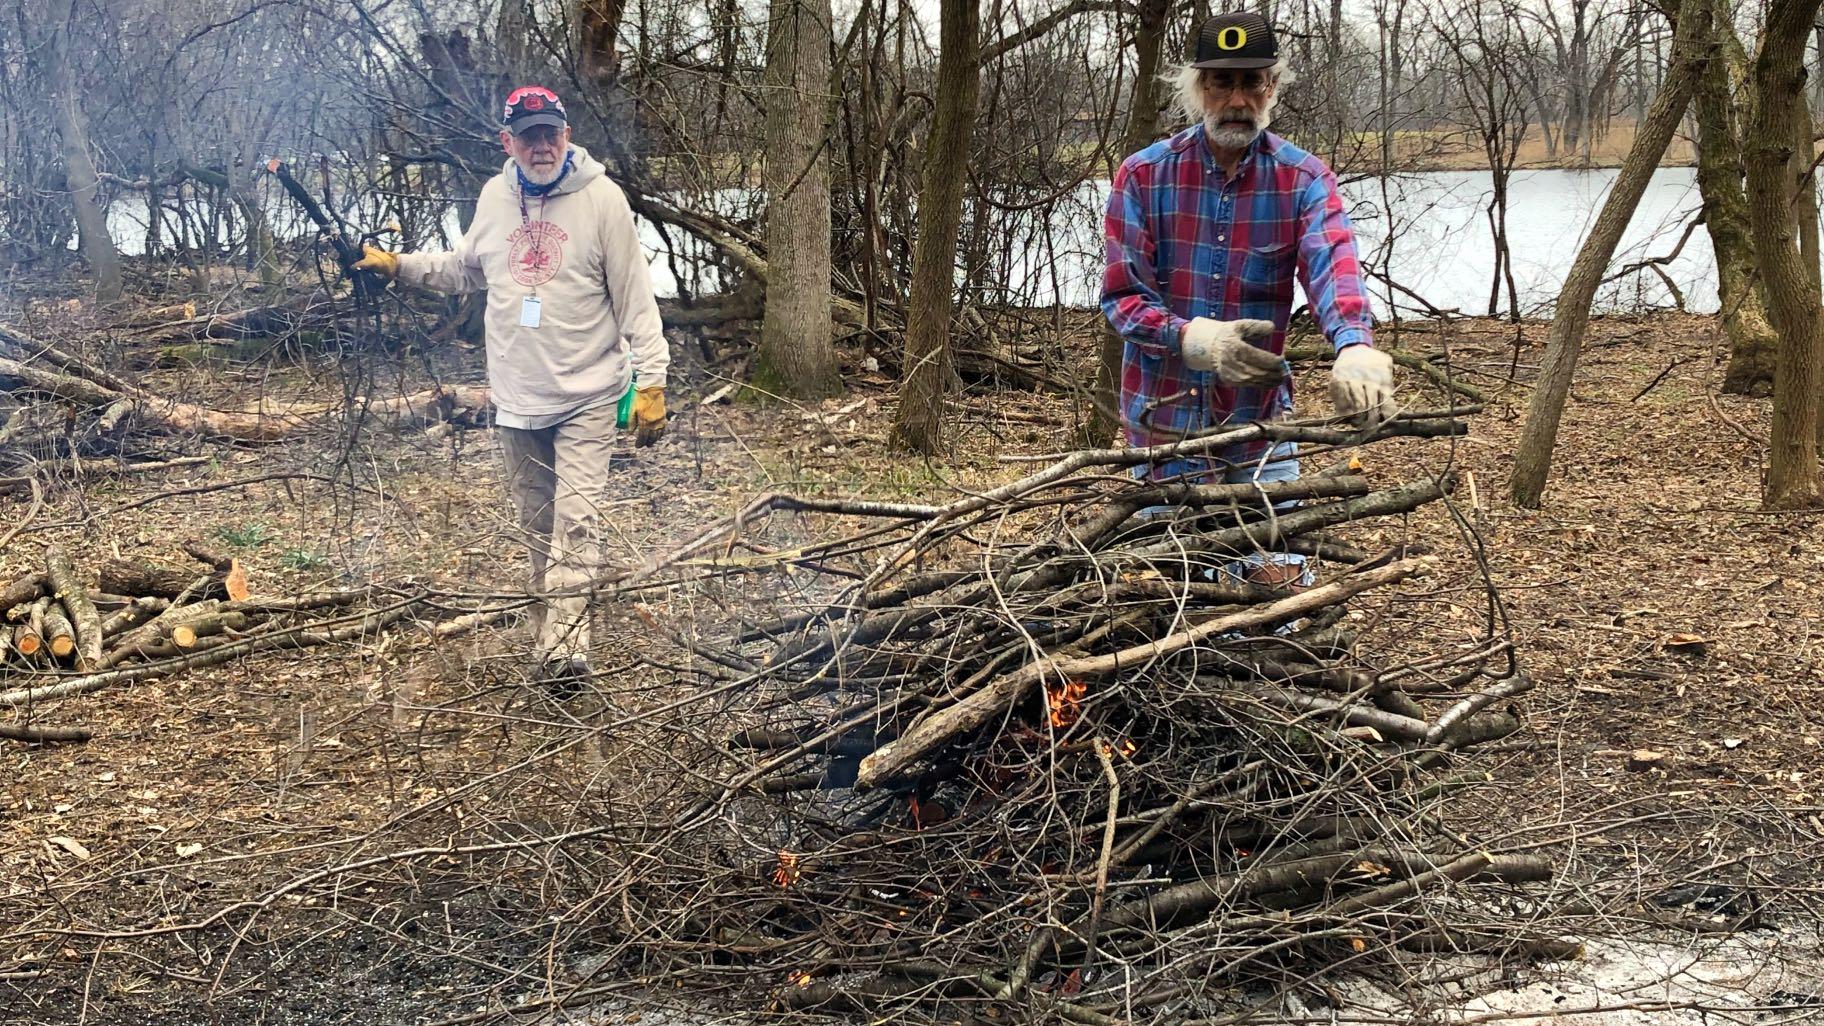 Long-time volunteers Gary Morrissey and Dan Goodwin stoke the pile of burning buckthorn. (Patty Wetli / WTTW News)